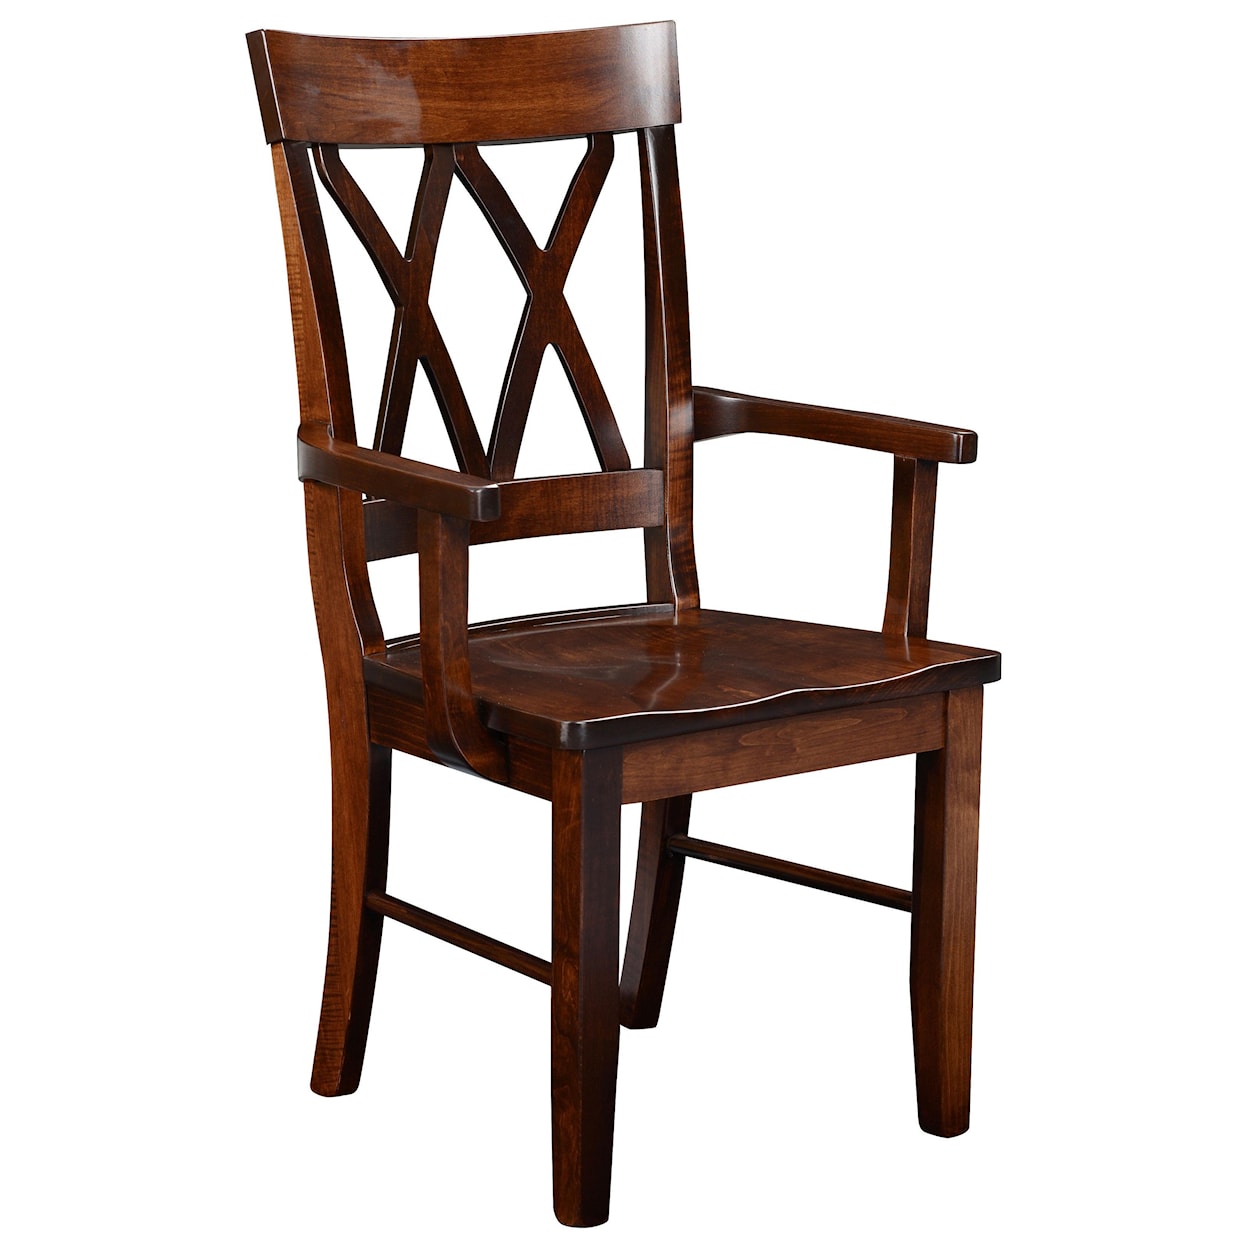 Wengerd Wood Products Fontana Arm Chair